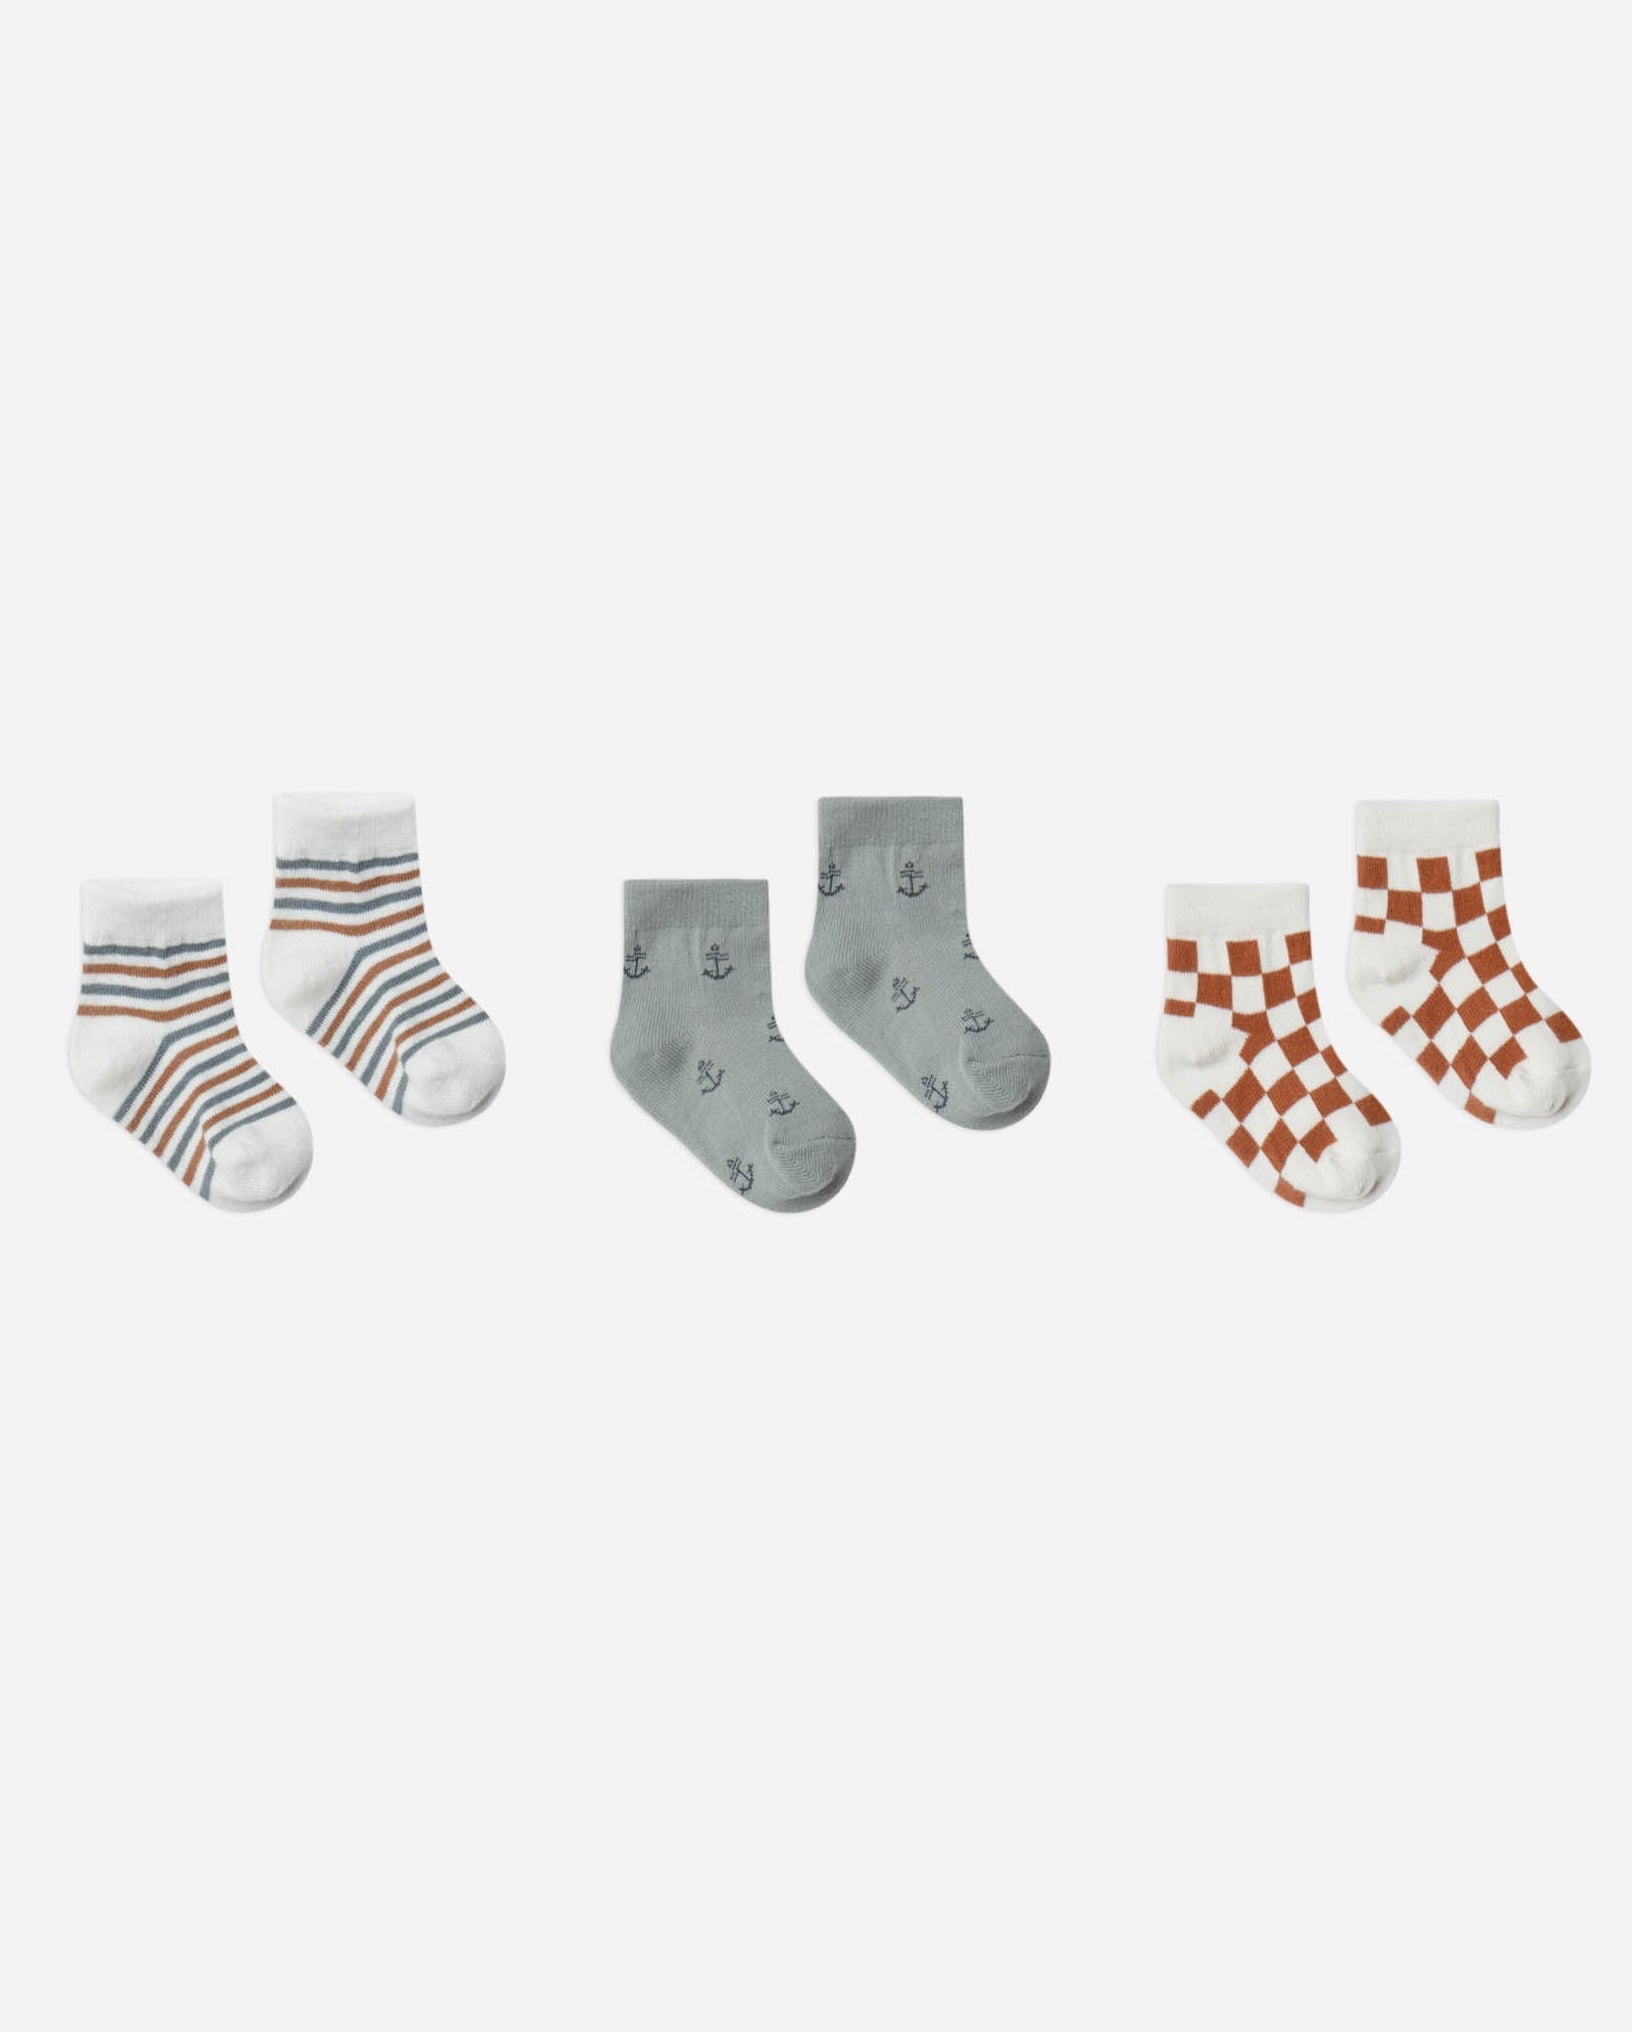 Printed Sock Set - Check, Geo, Stripe